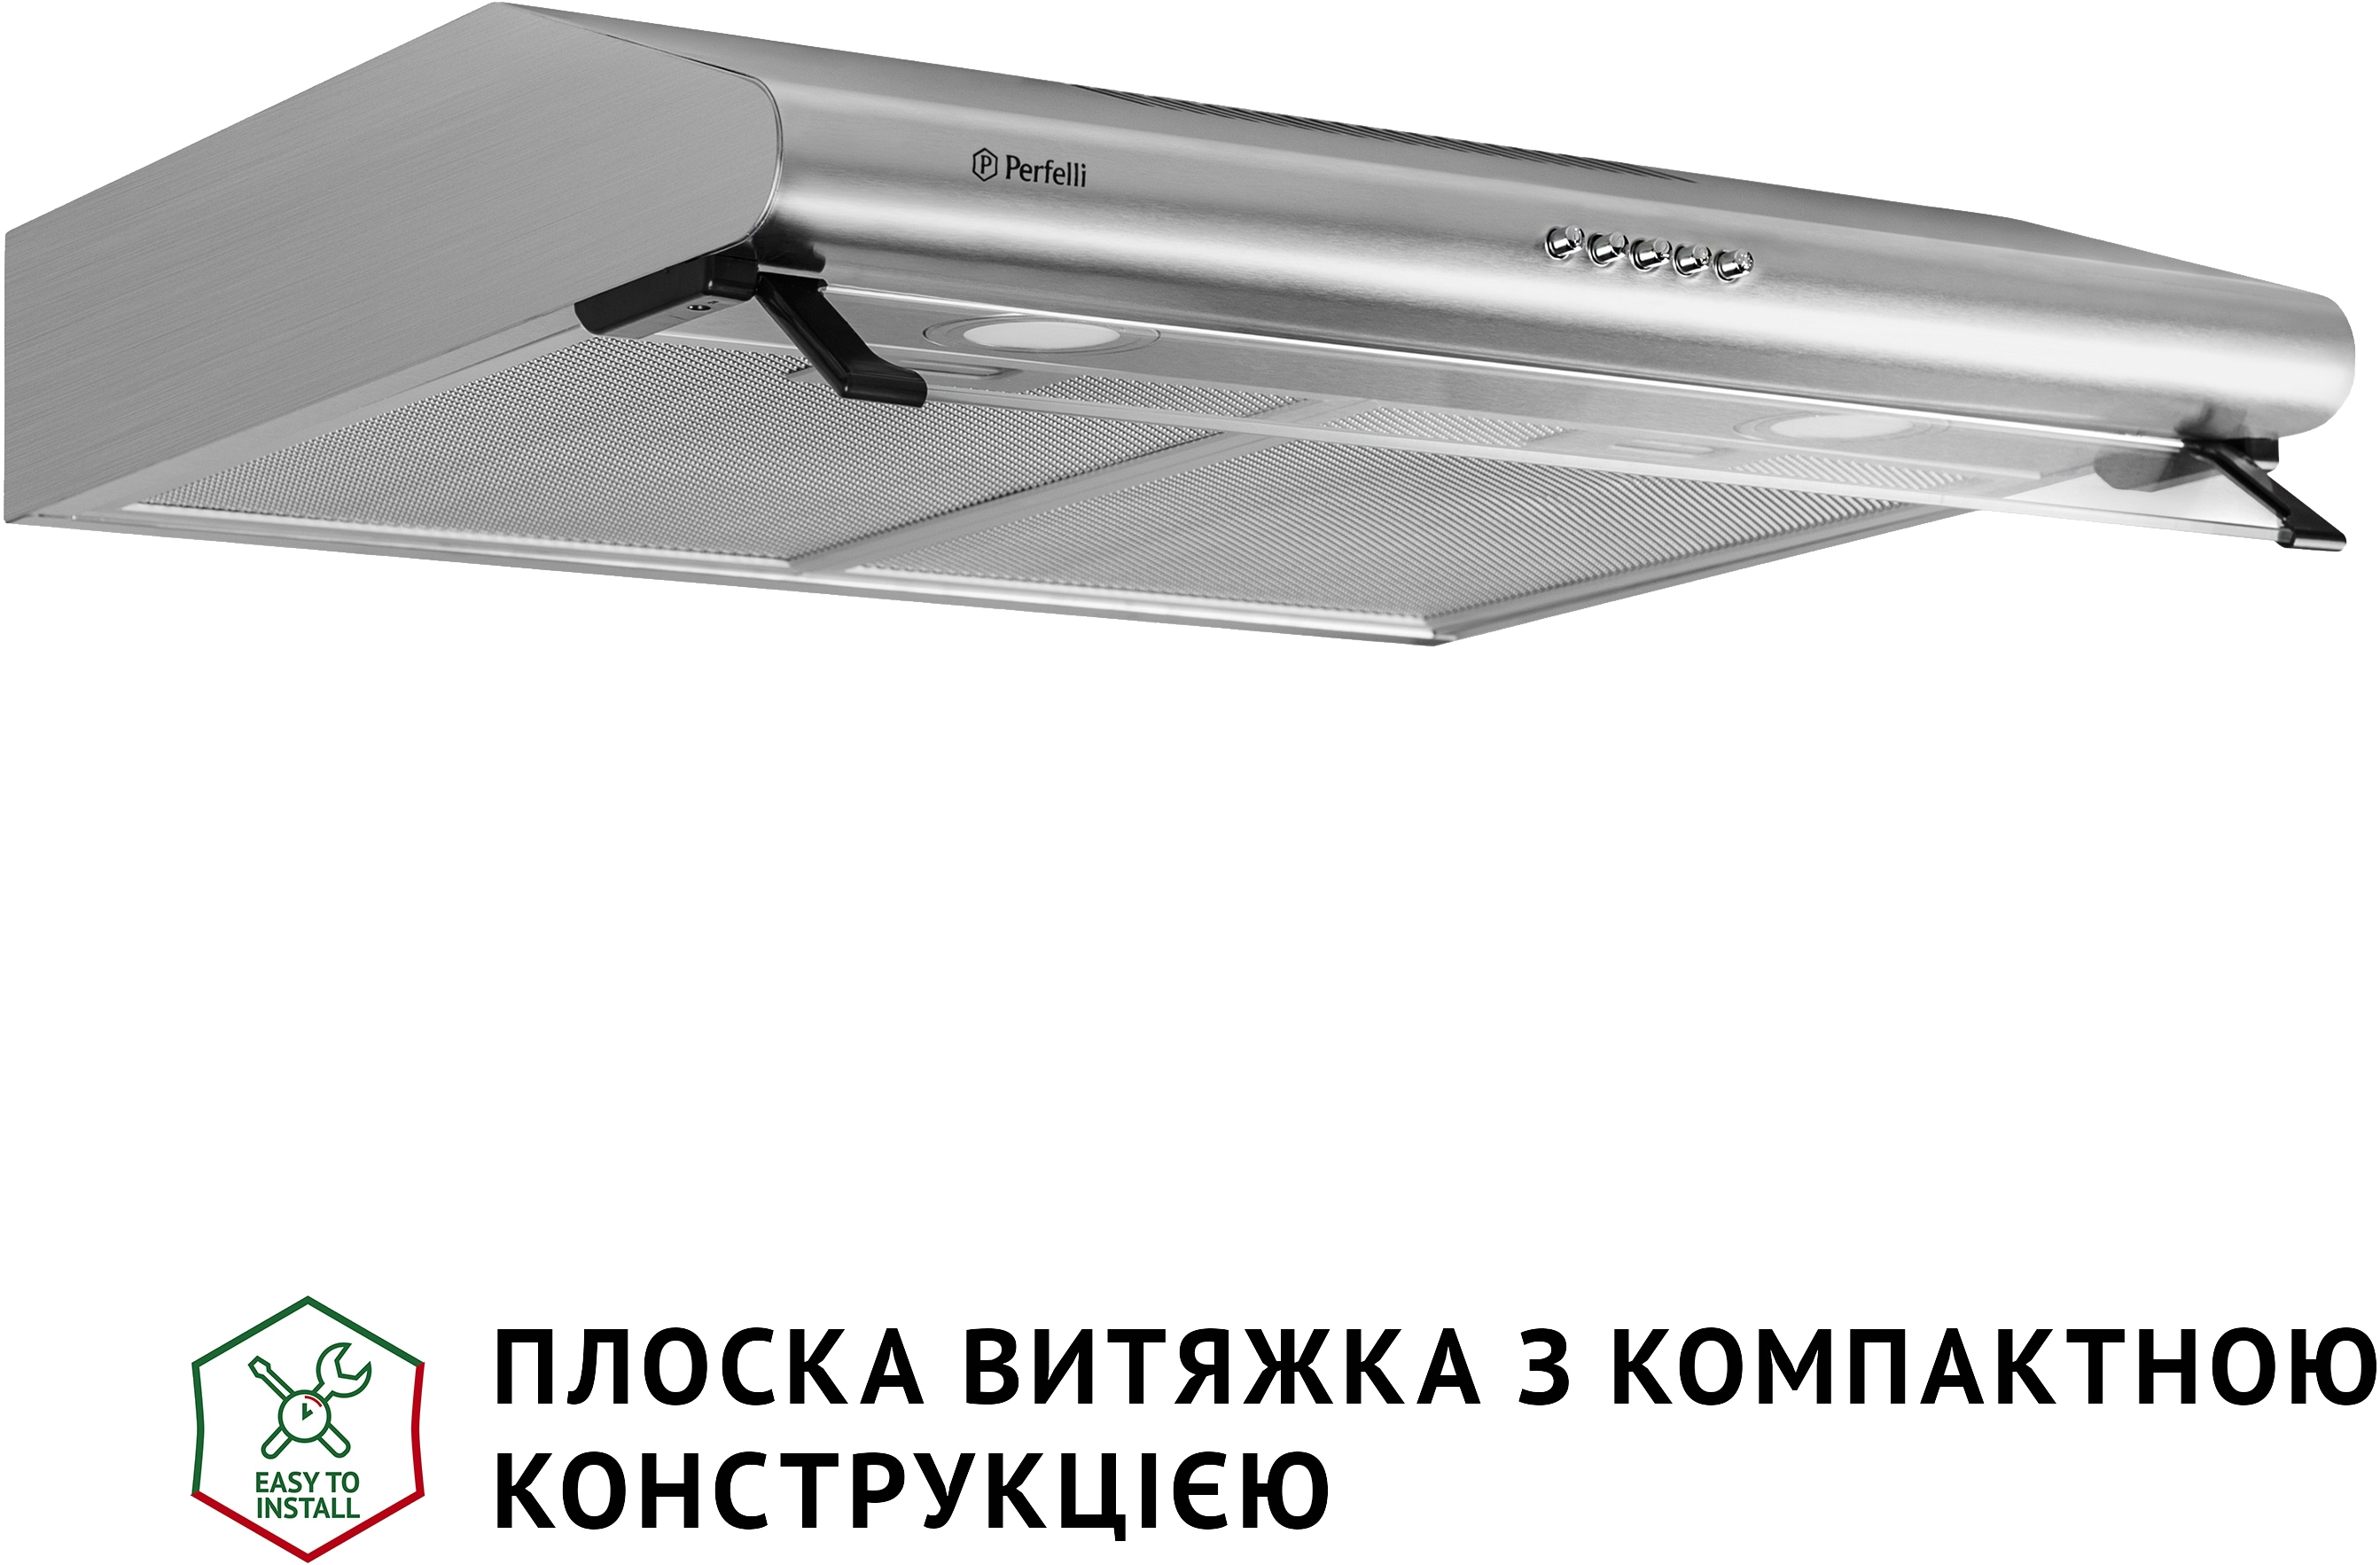 Вытяжка кухонная Perfelli PL 6042 I LED цена 2899.00 грн - фотография 2